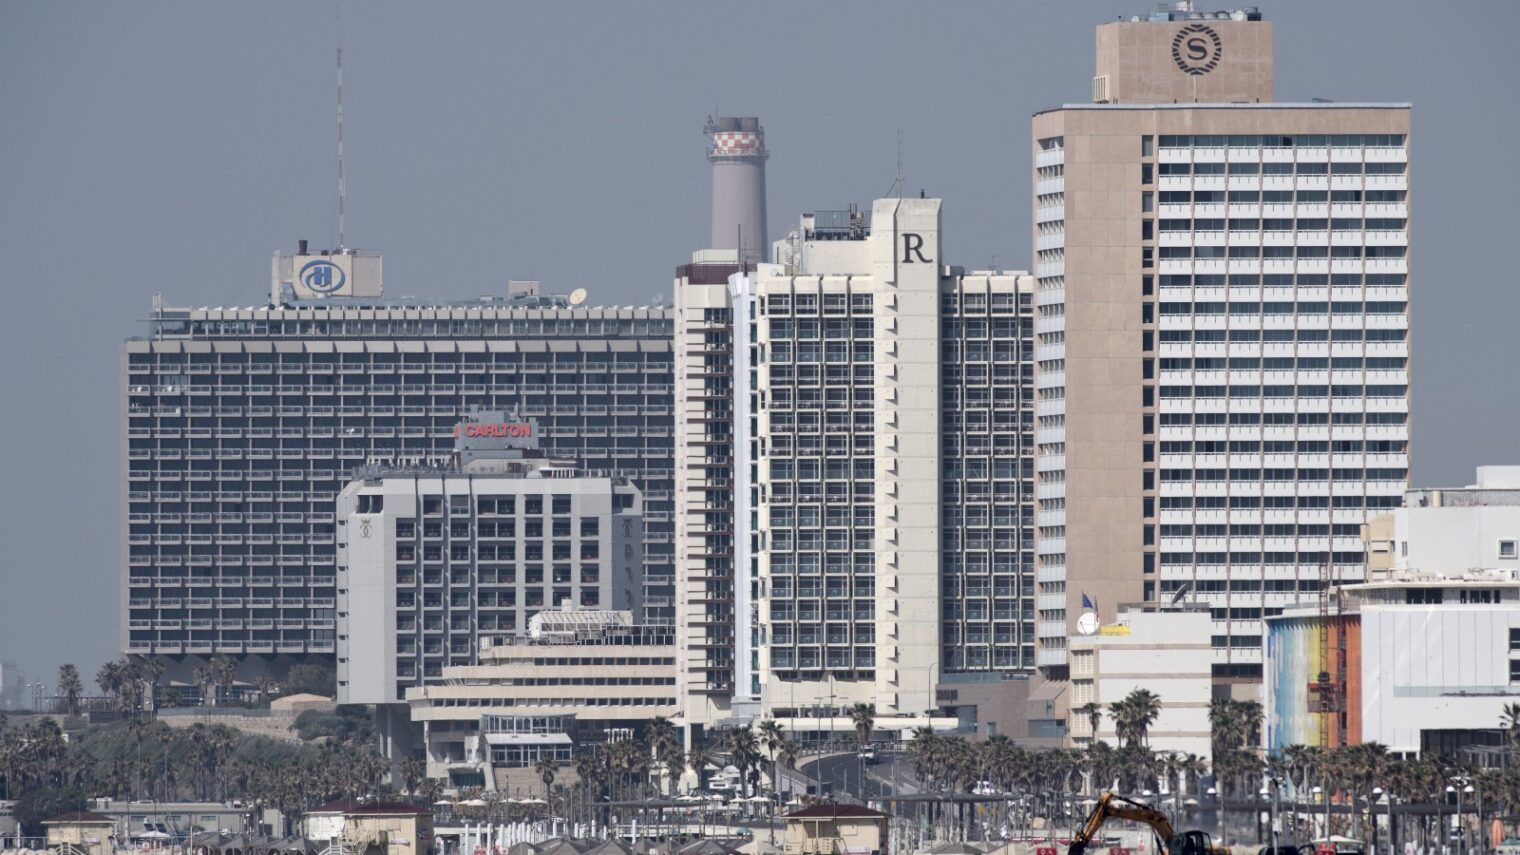 Hotels at Tel Aviv's coastline, March 2020. Photo by Gili Yaari /Flash90